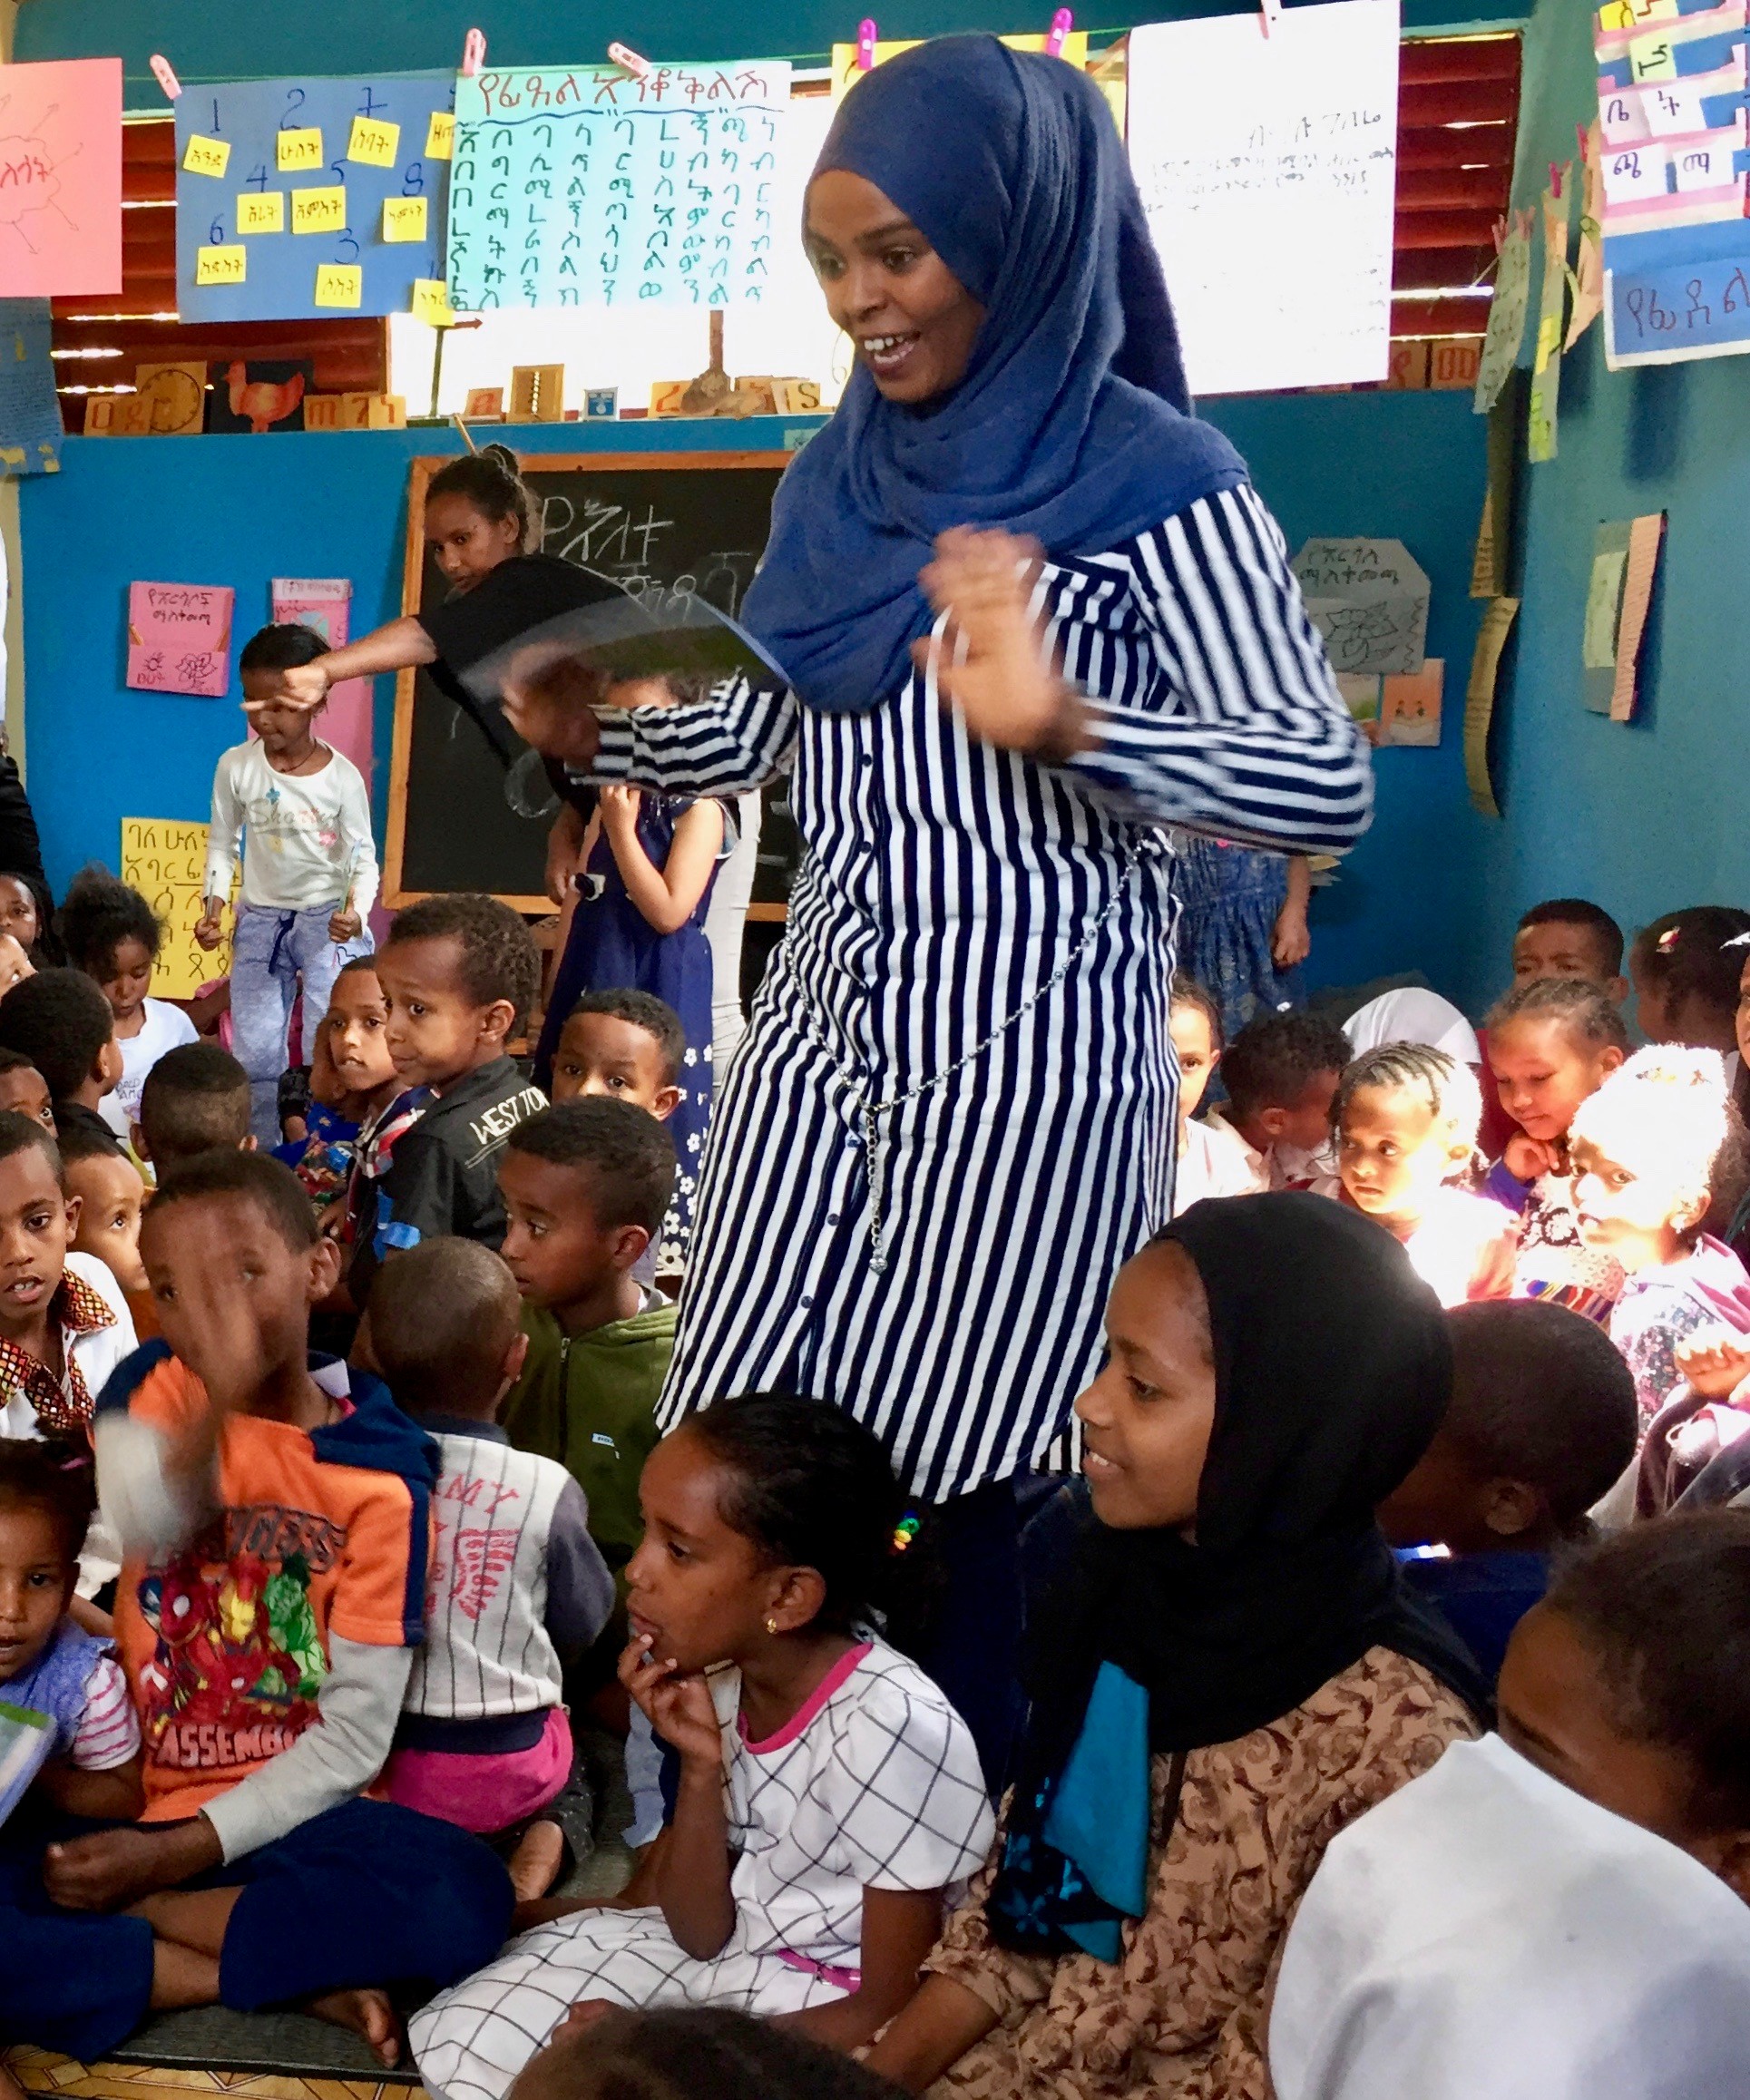 World Vision Community Literacy Leader in Ethiopia